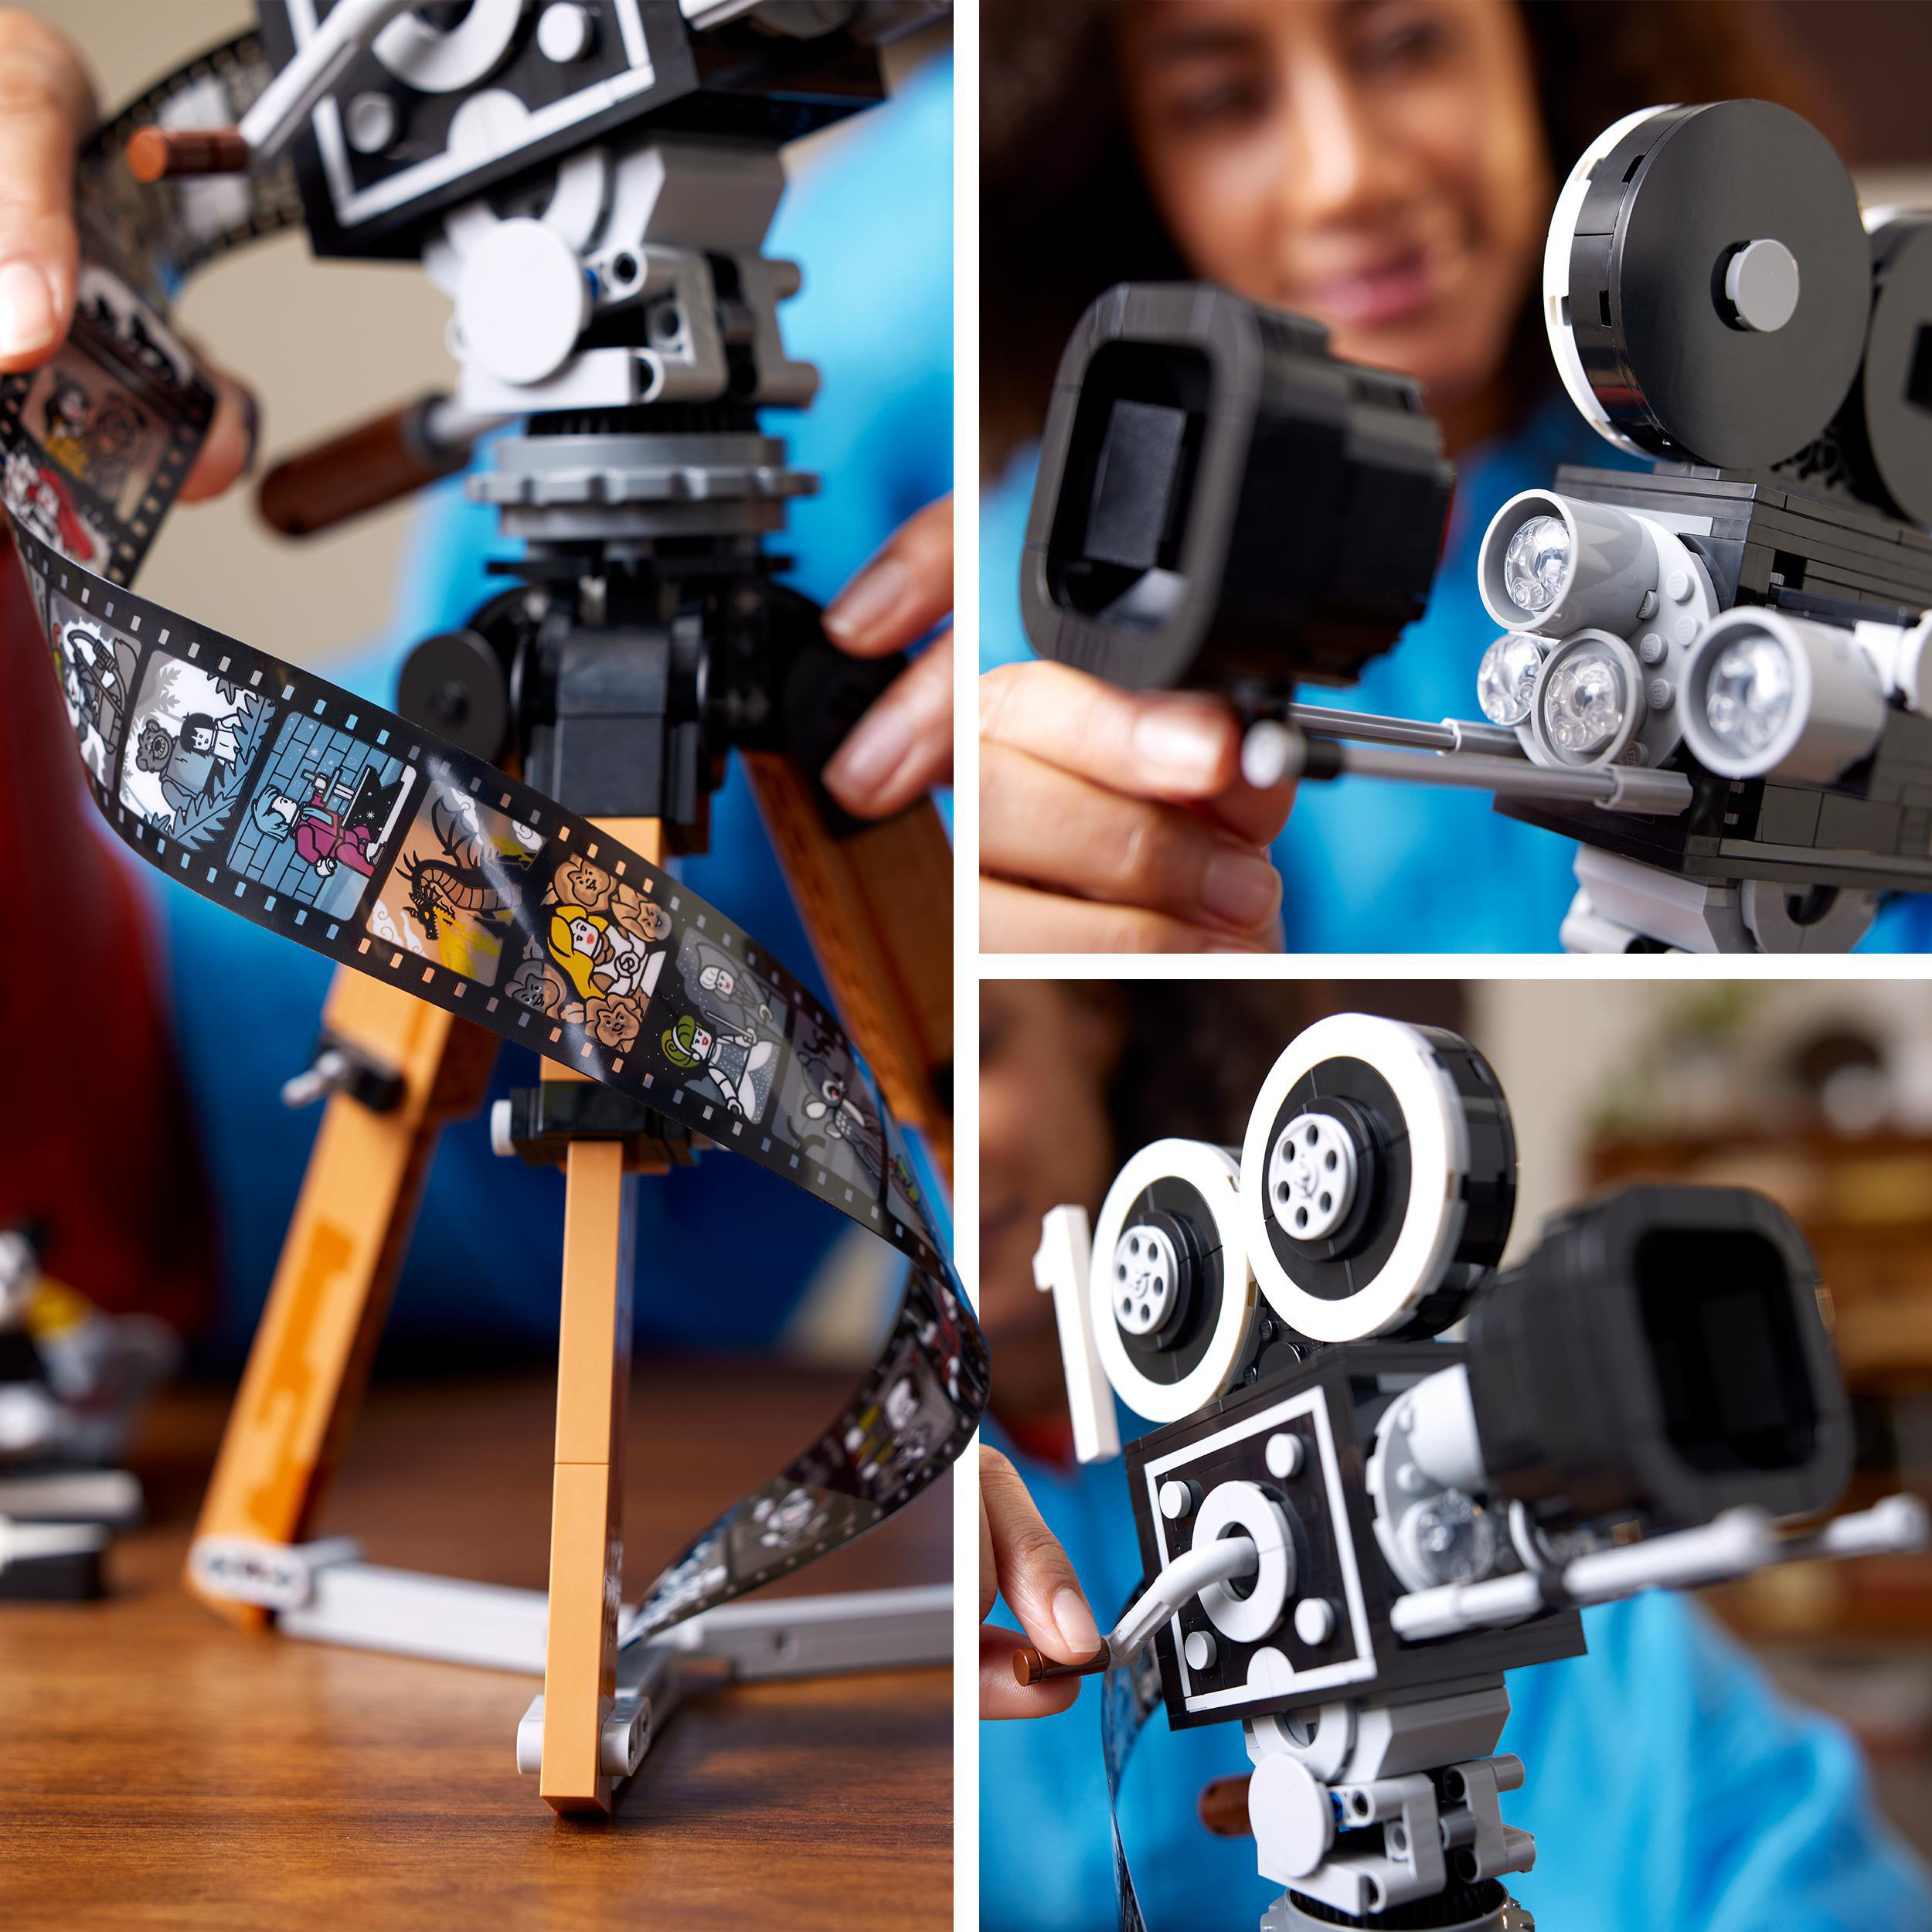 LEGO Disney 43230 Kamera – Hommage Bausatz, Disney Mehrfarbig Walt an